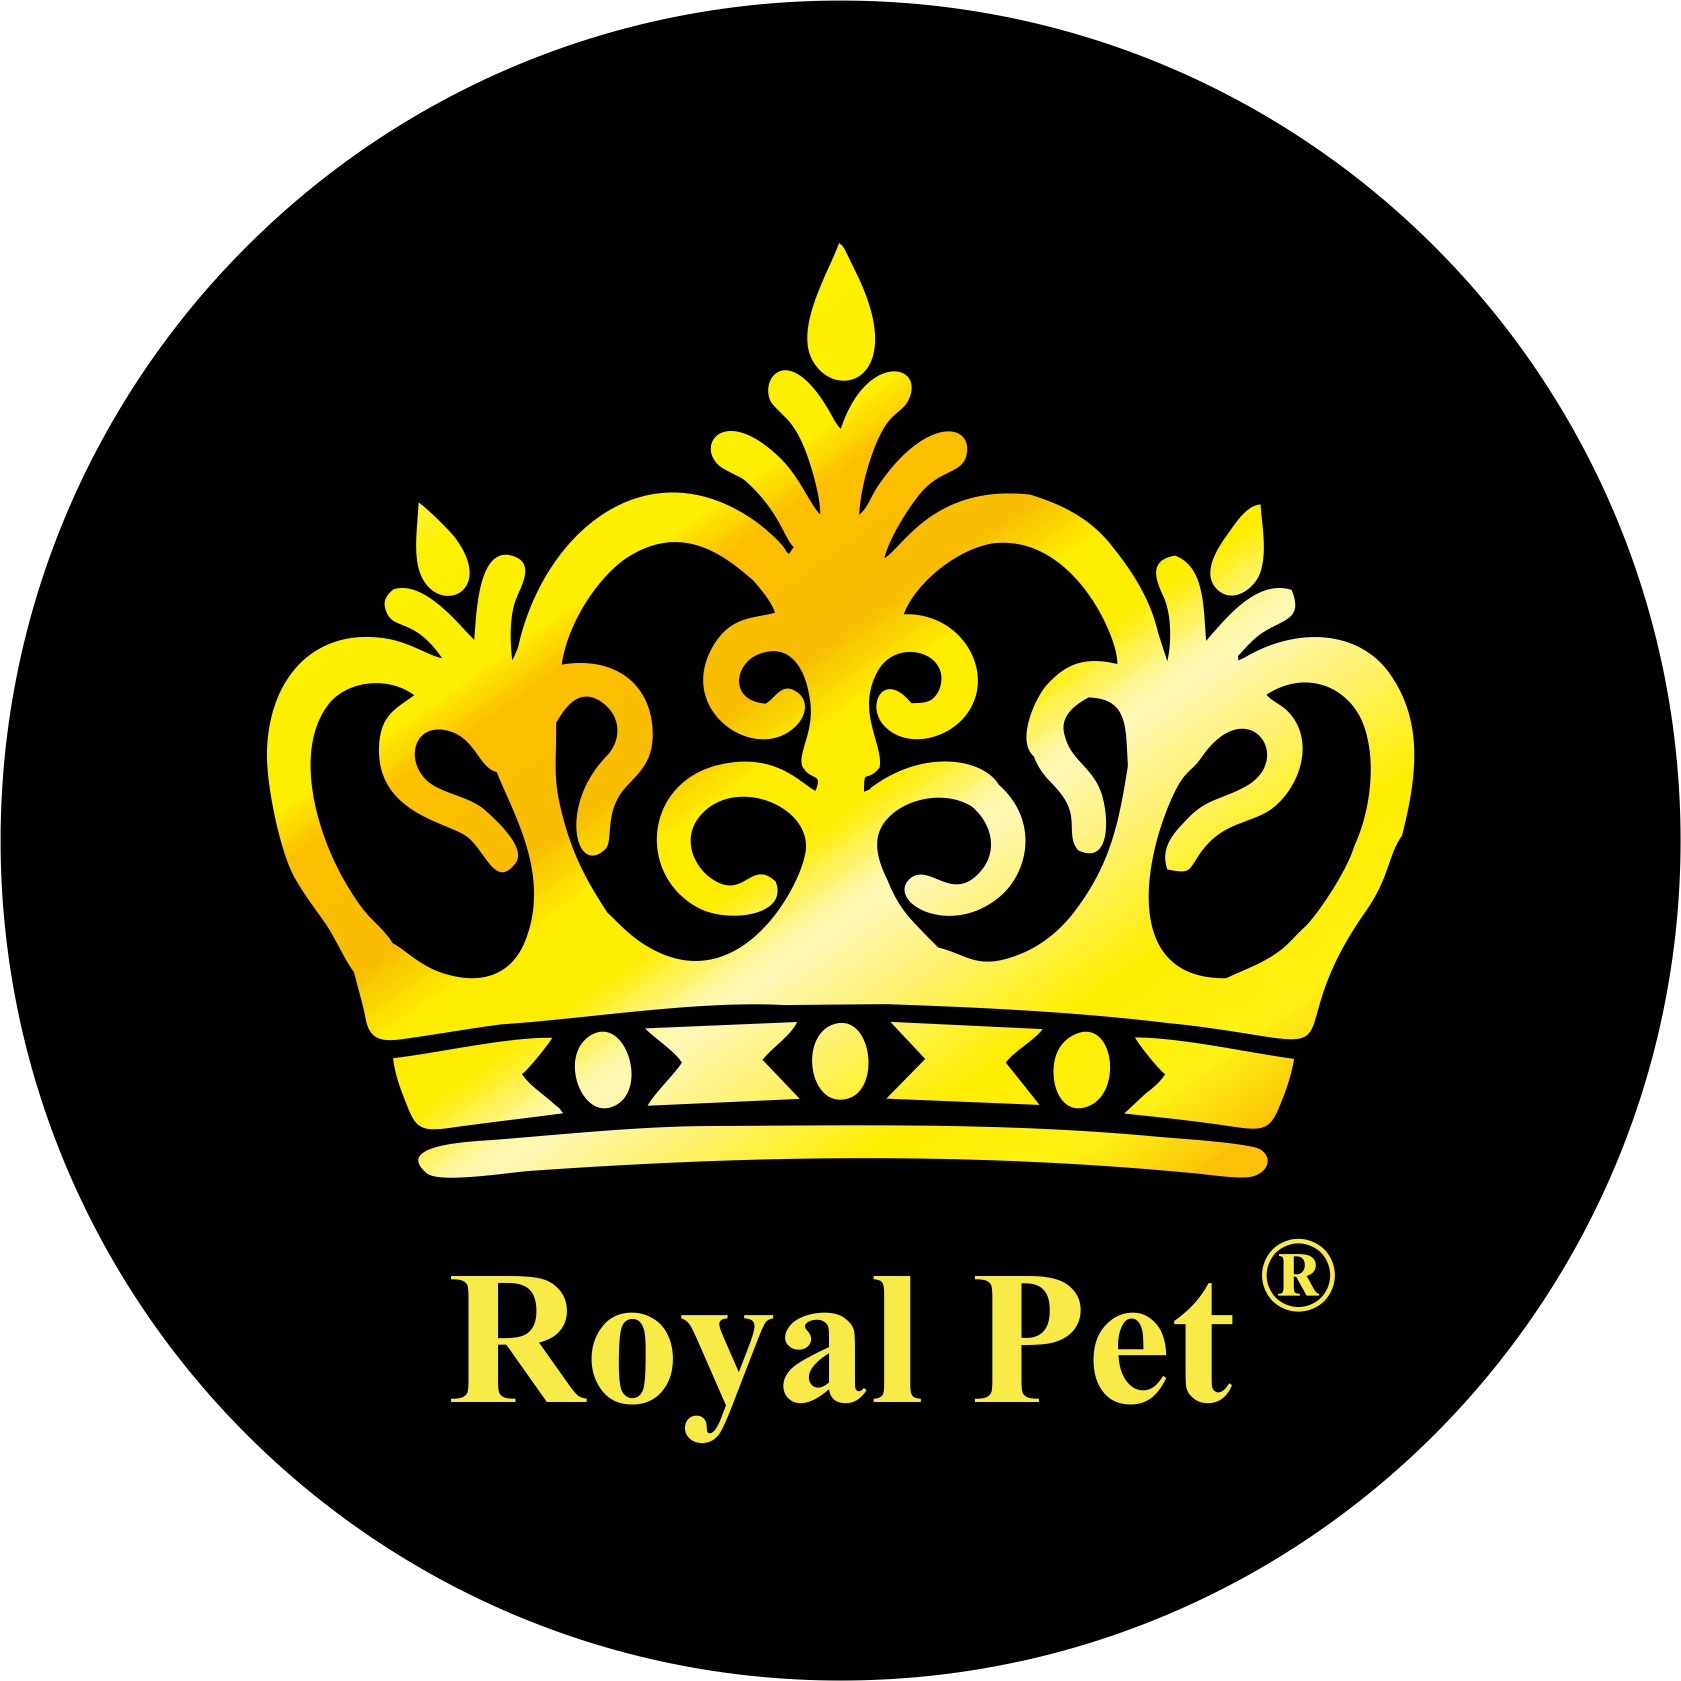 Royal pet. Одежда для собак Роял дог. Royal Pet одежда для собак. ПЭТ Ройял. Royal знак.